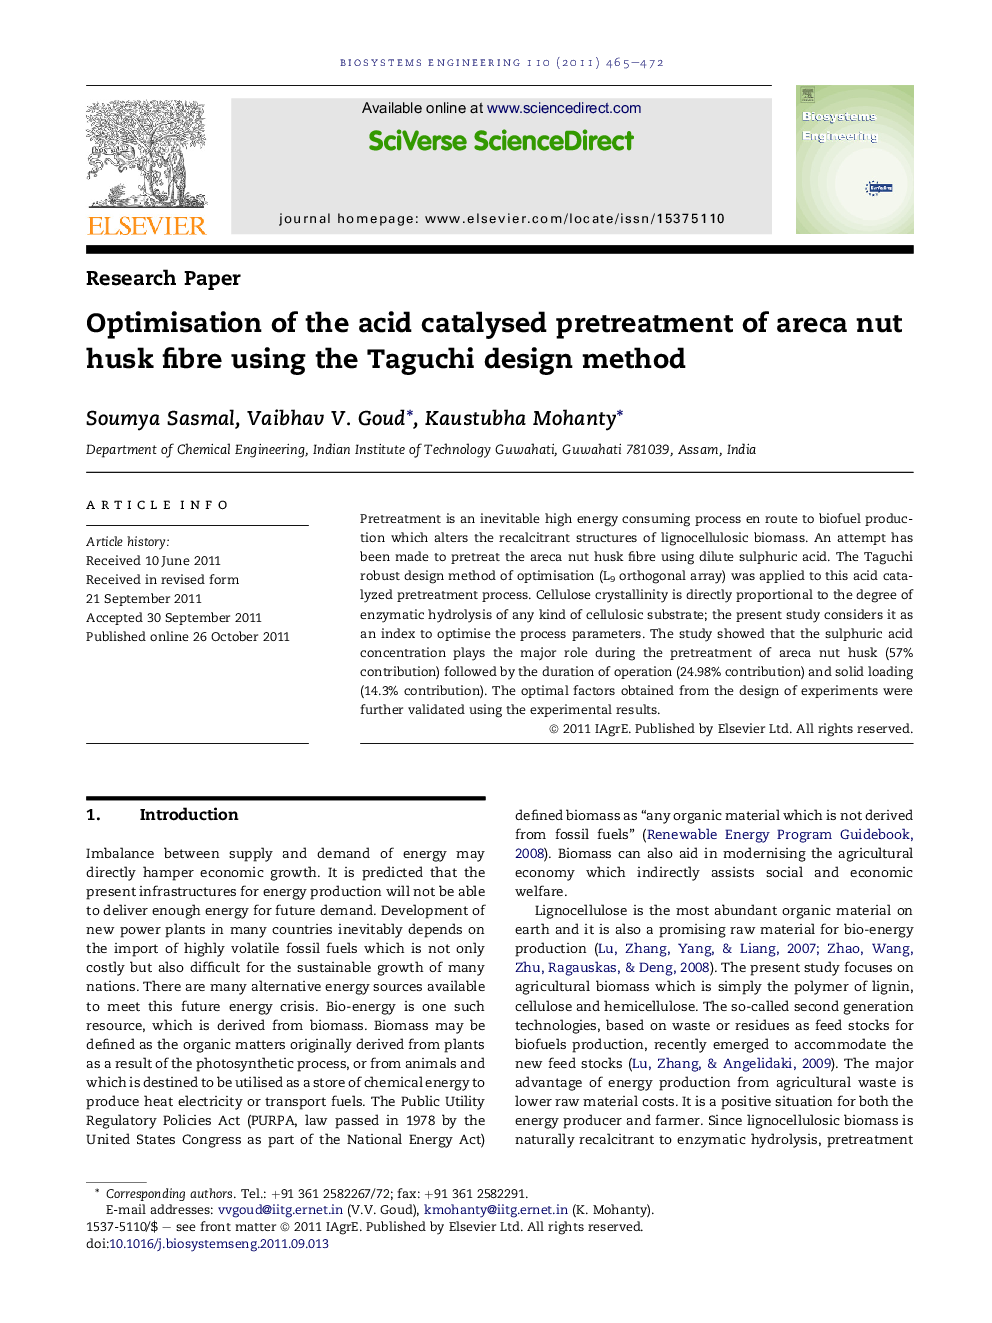 Optimisation of the acid catalysed pretreatment of areca nut husk fibre using the Taguchi design method